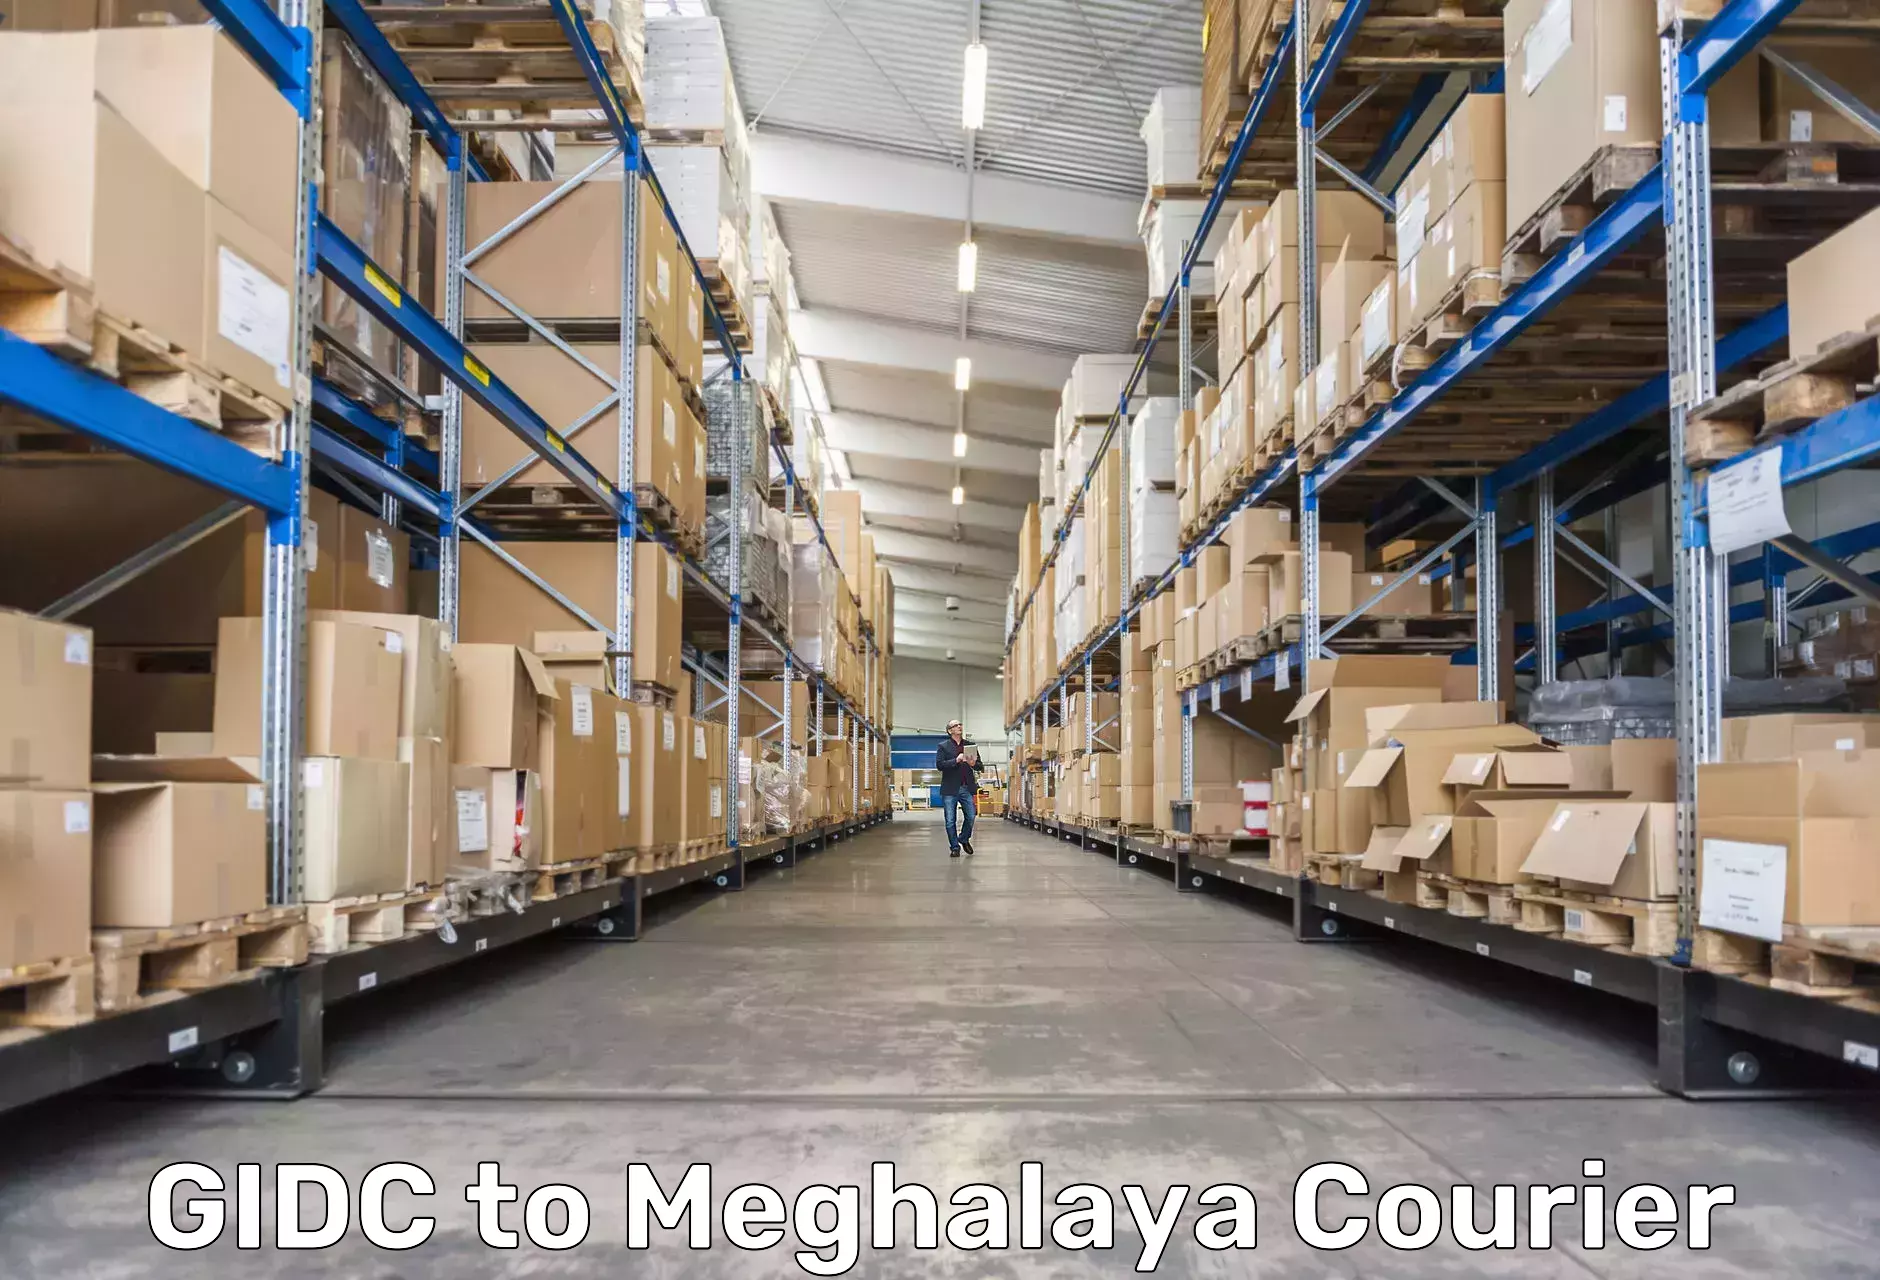 Digital courier platforms in GIDC to Meghalaya